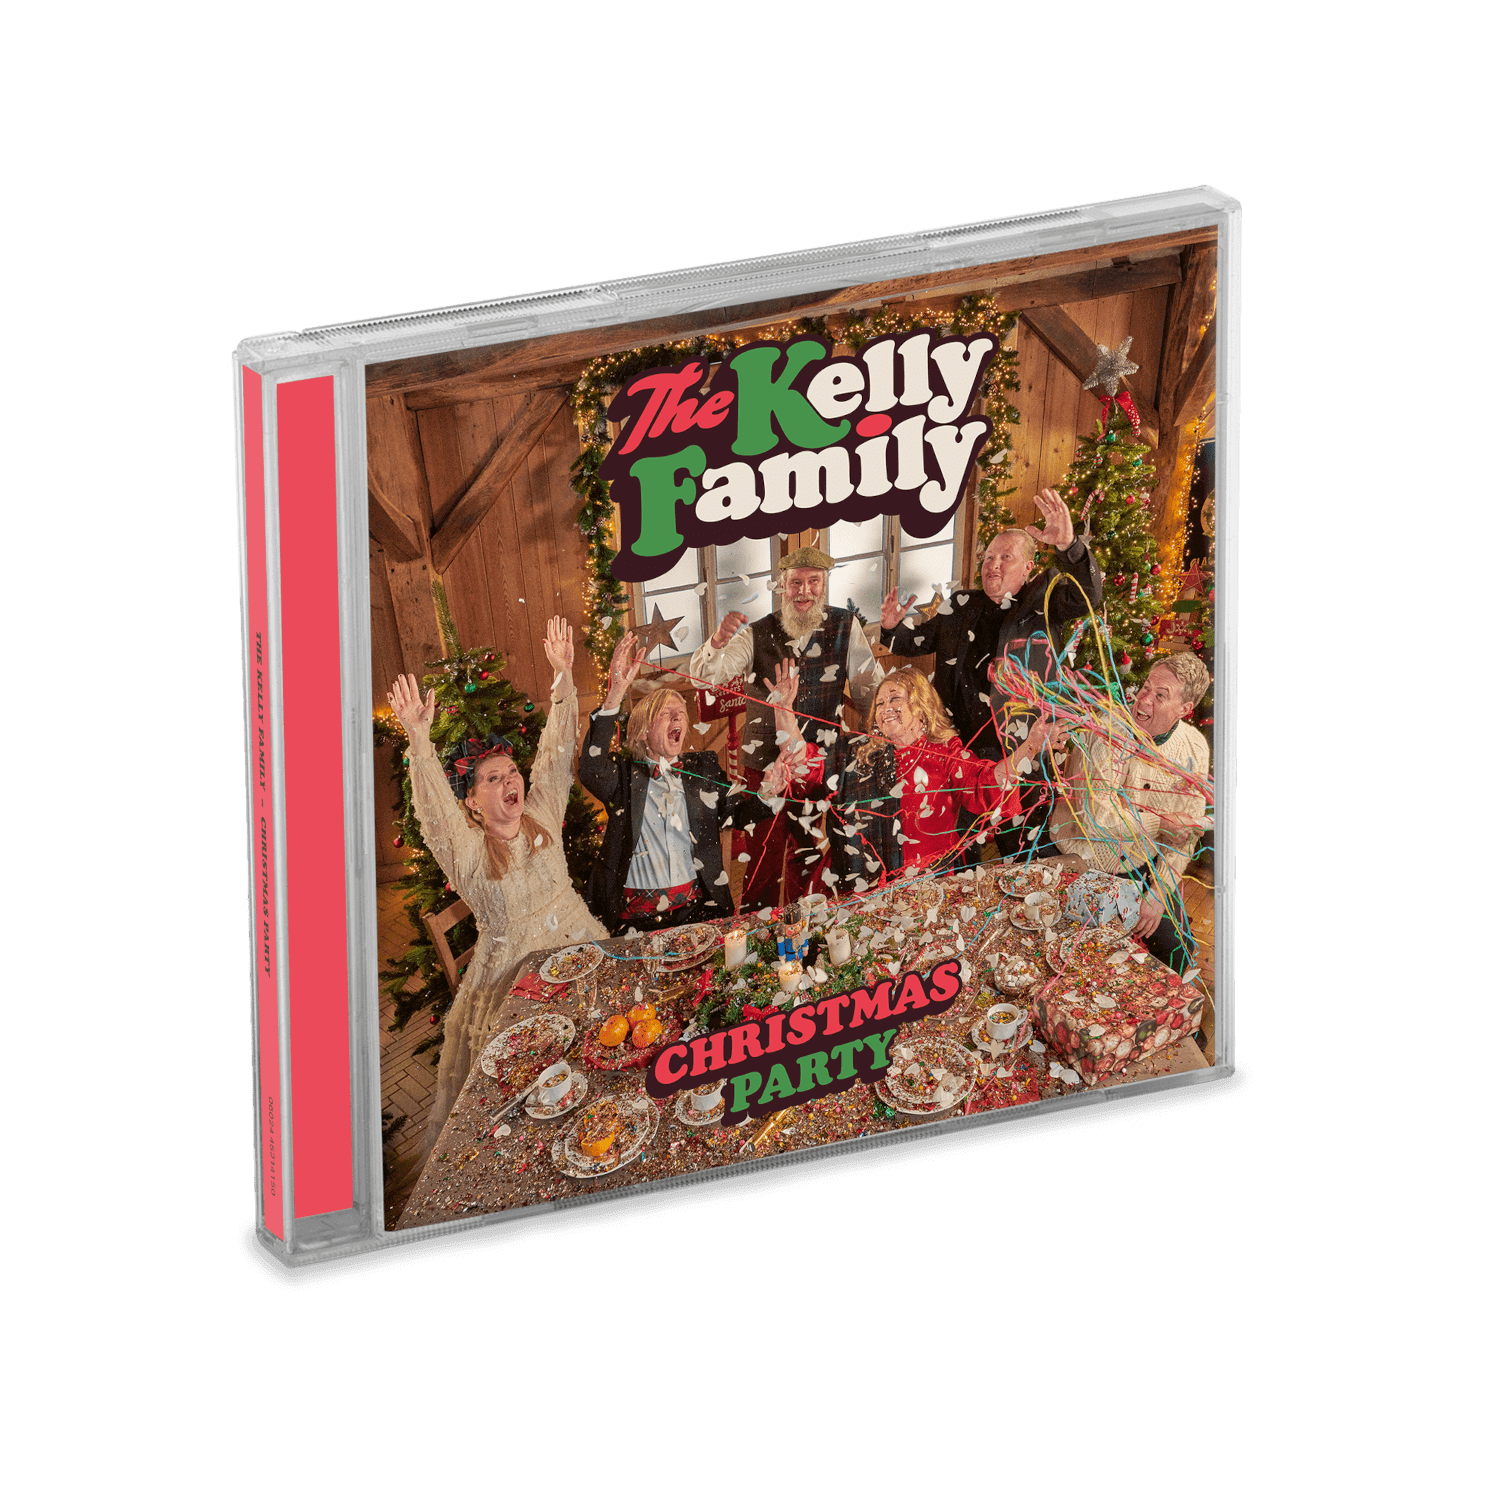 https://images.bravado.de/prod/product-assets/product-asset-data/kelly-family-the/kelly-family/products/139885/web/324777/image-thumb__324777__3000x3000_original/The-Kelly-Family-Christmas-Party-CD-139885-324777.png